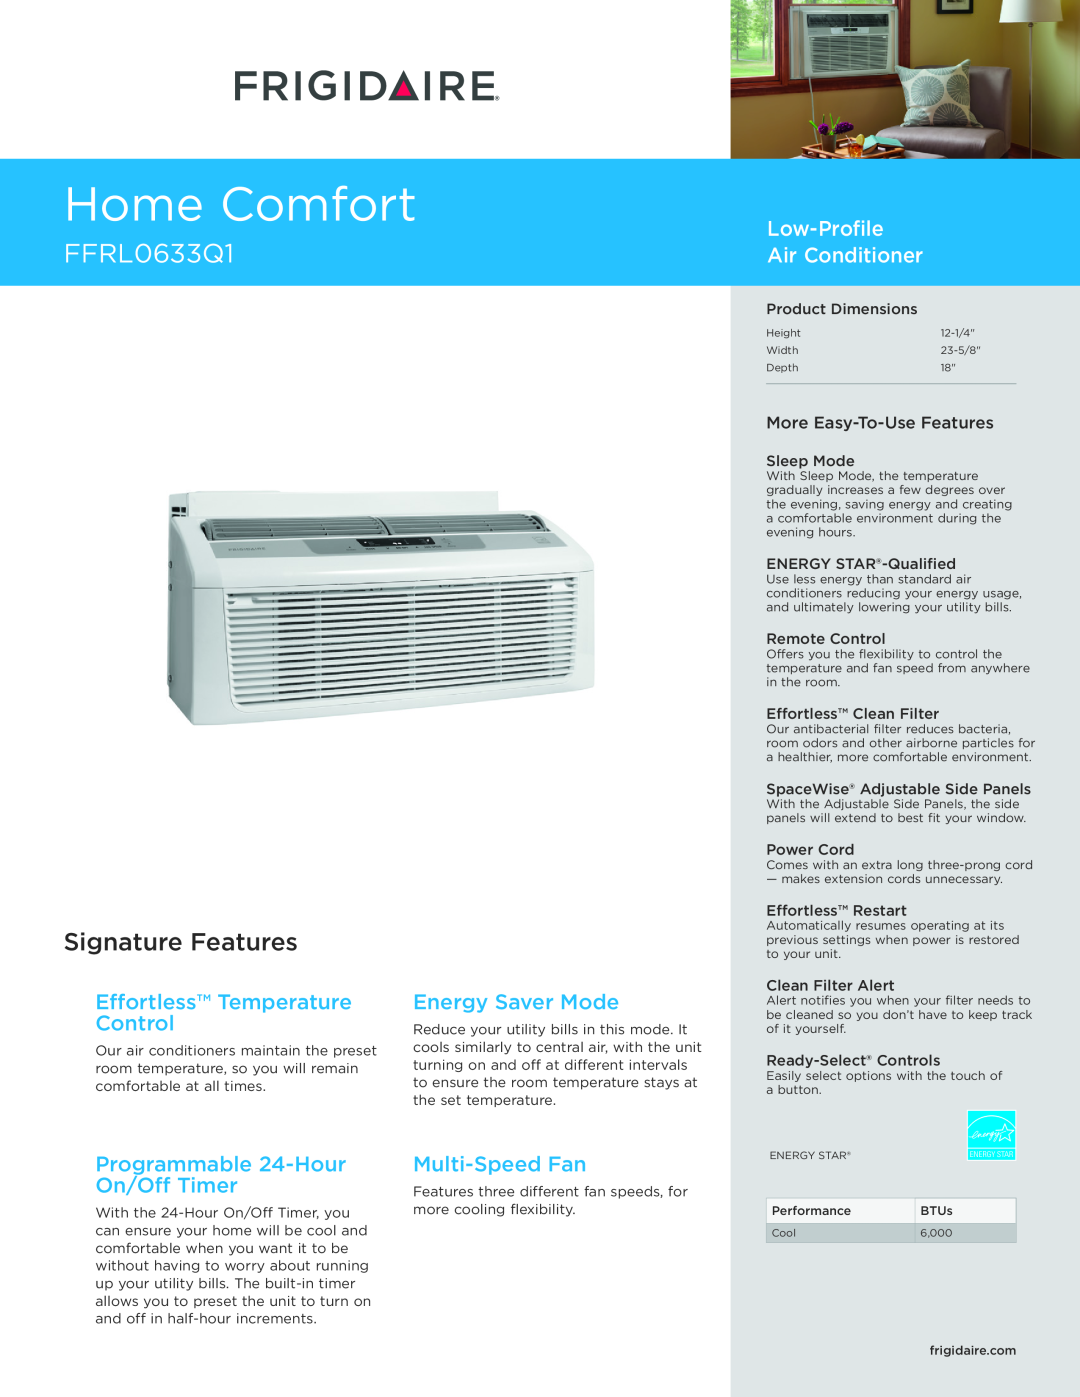 Frigidaire FFRL0633Q1 dimensions Home Comfort, Signature Features, Low-Profile Air Conditioner , Energy Saver Mode 